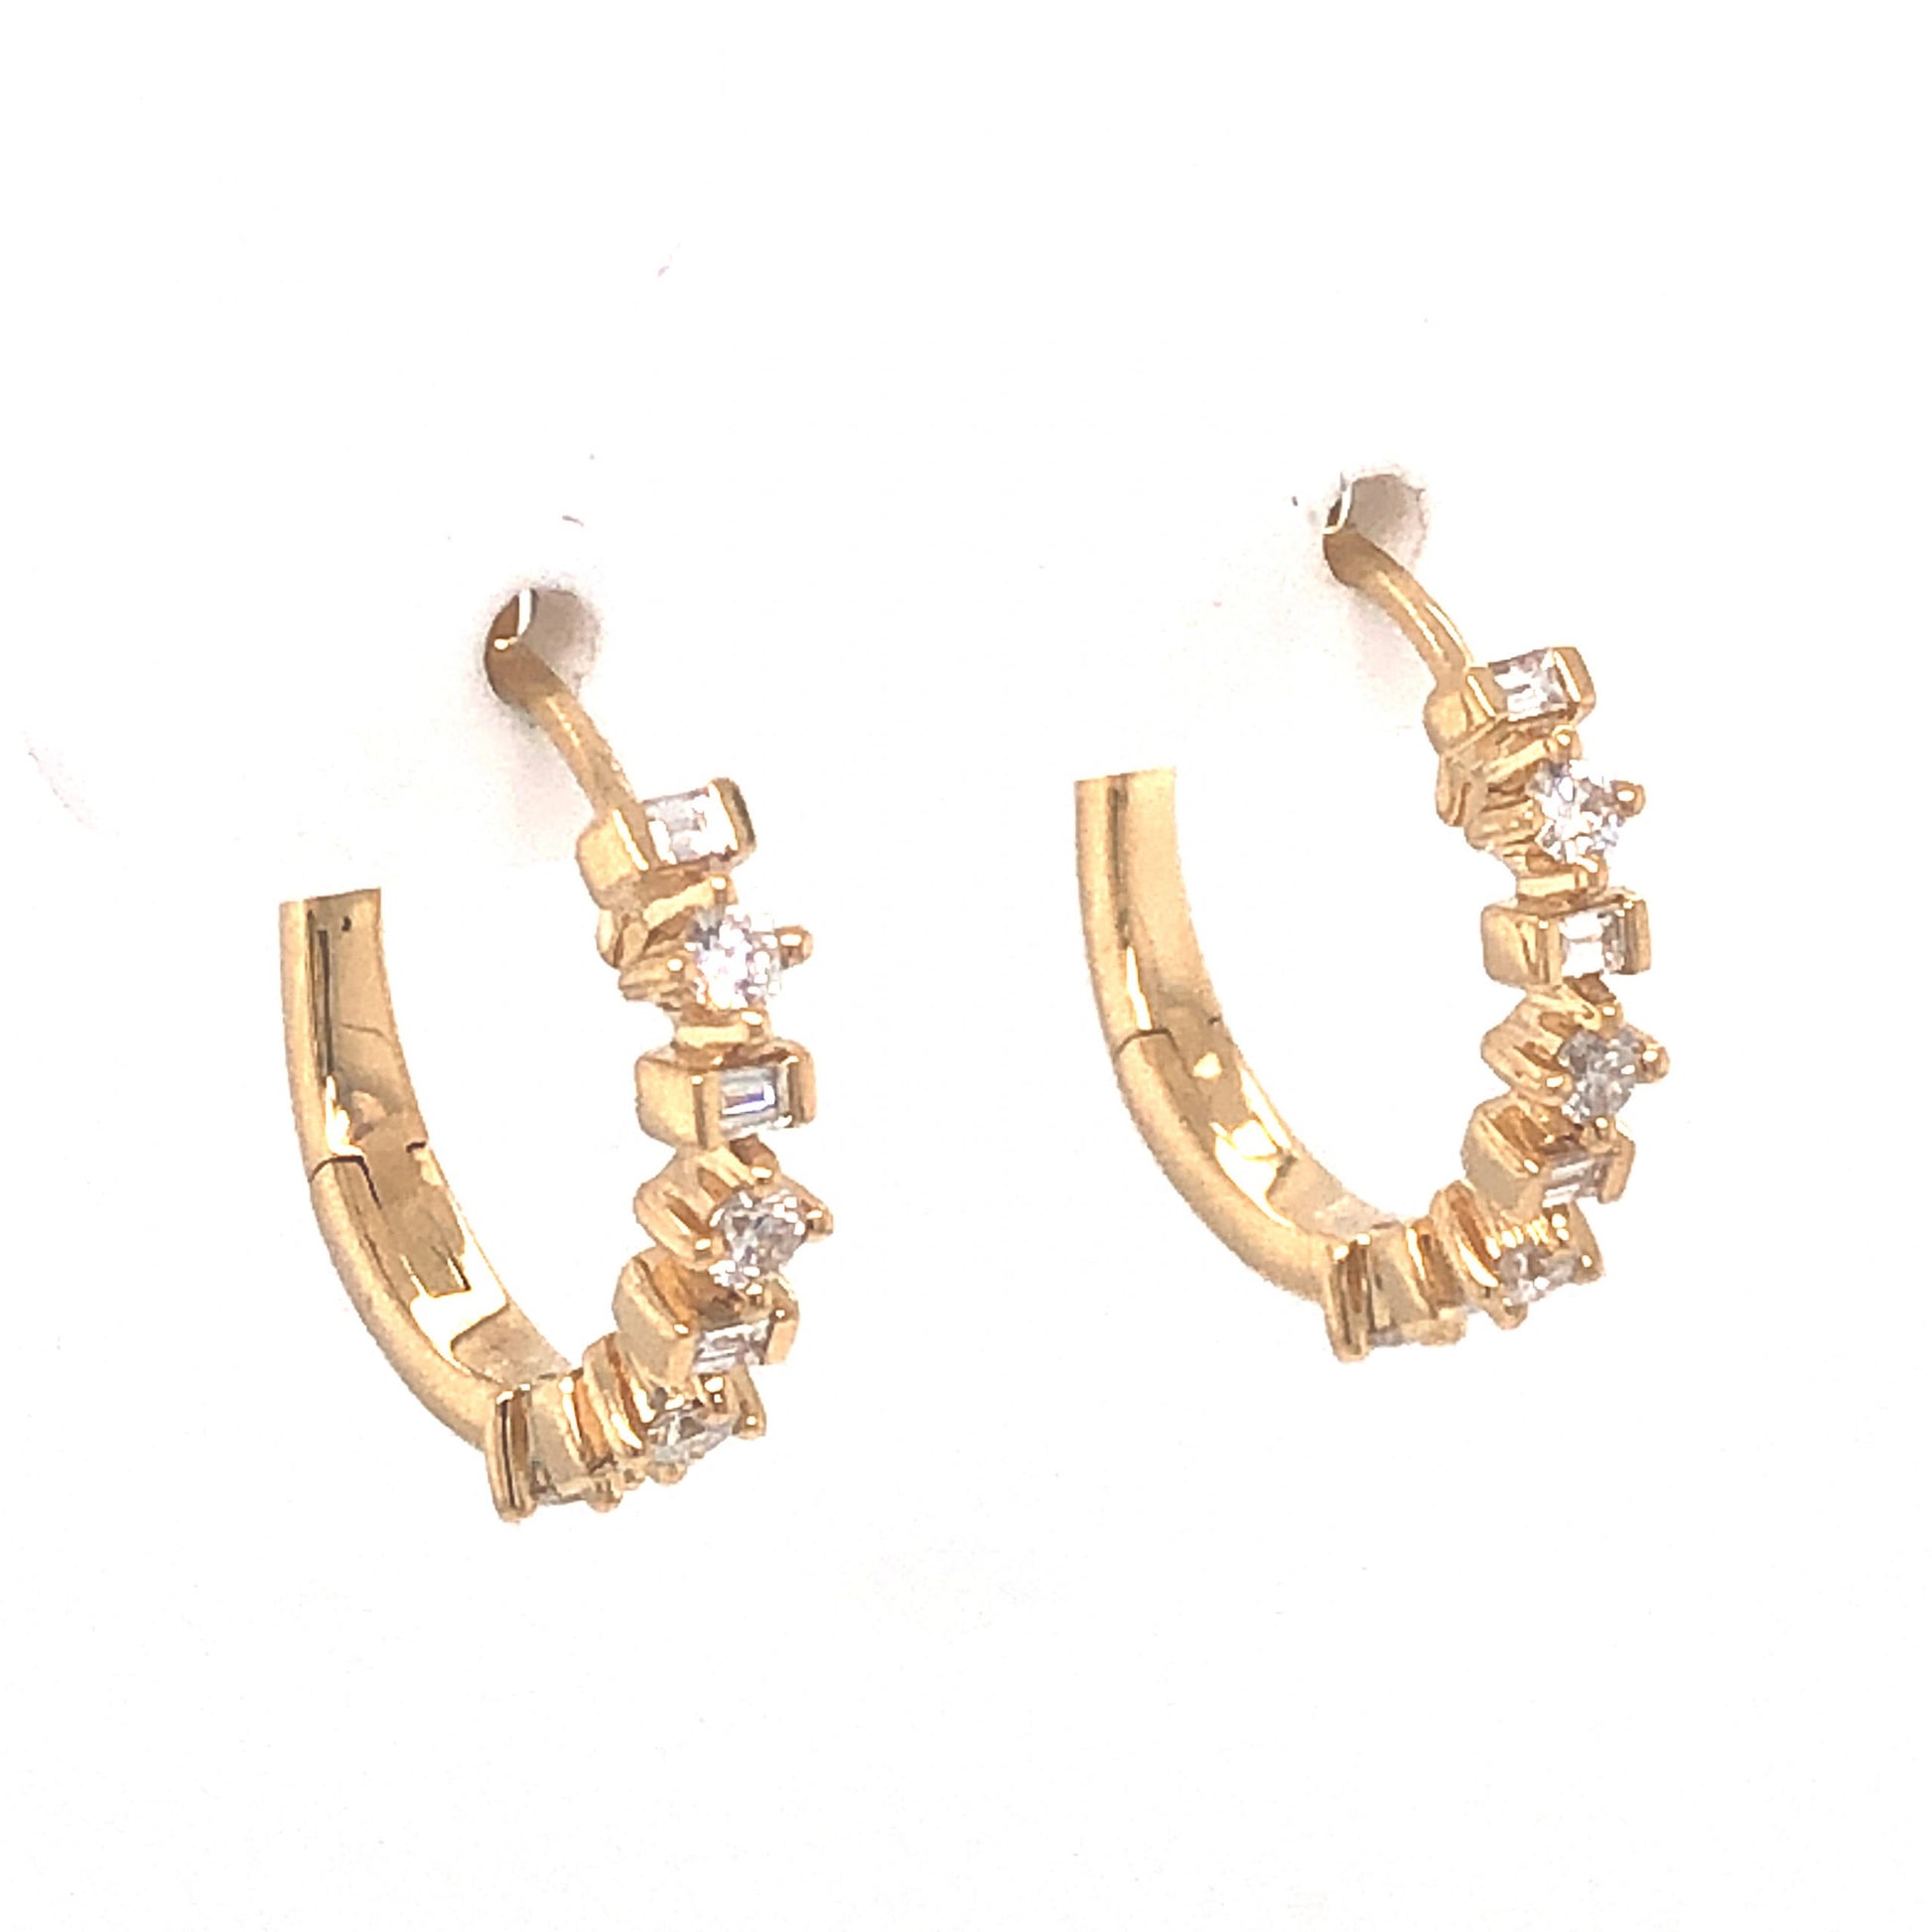 .34 Carat Diamond Hoop Earrings in 18K Yellow GoldComposition: 18 Karat Yellow GoldTotal Diamond Weight: .34 ctTotal Gram Weight: 3.6 gInscription: 18k 750